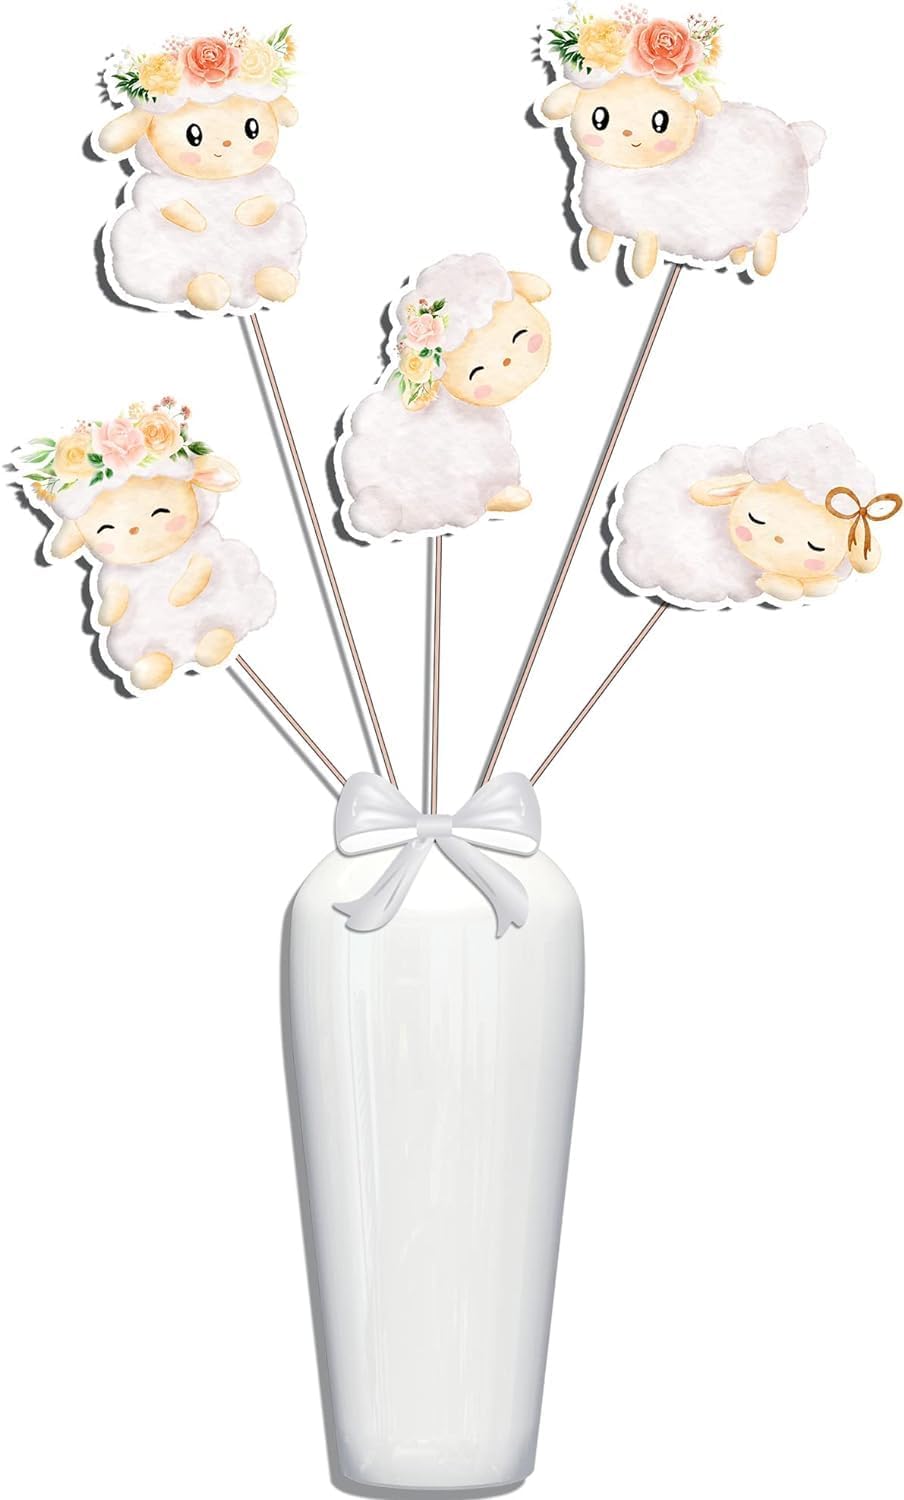 Enchanted Garden Sheep Stick Centerpieces - Adorable Floral Lamb Picks for Sweet Celebrations (Set of 5)